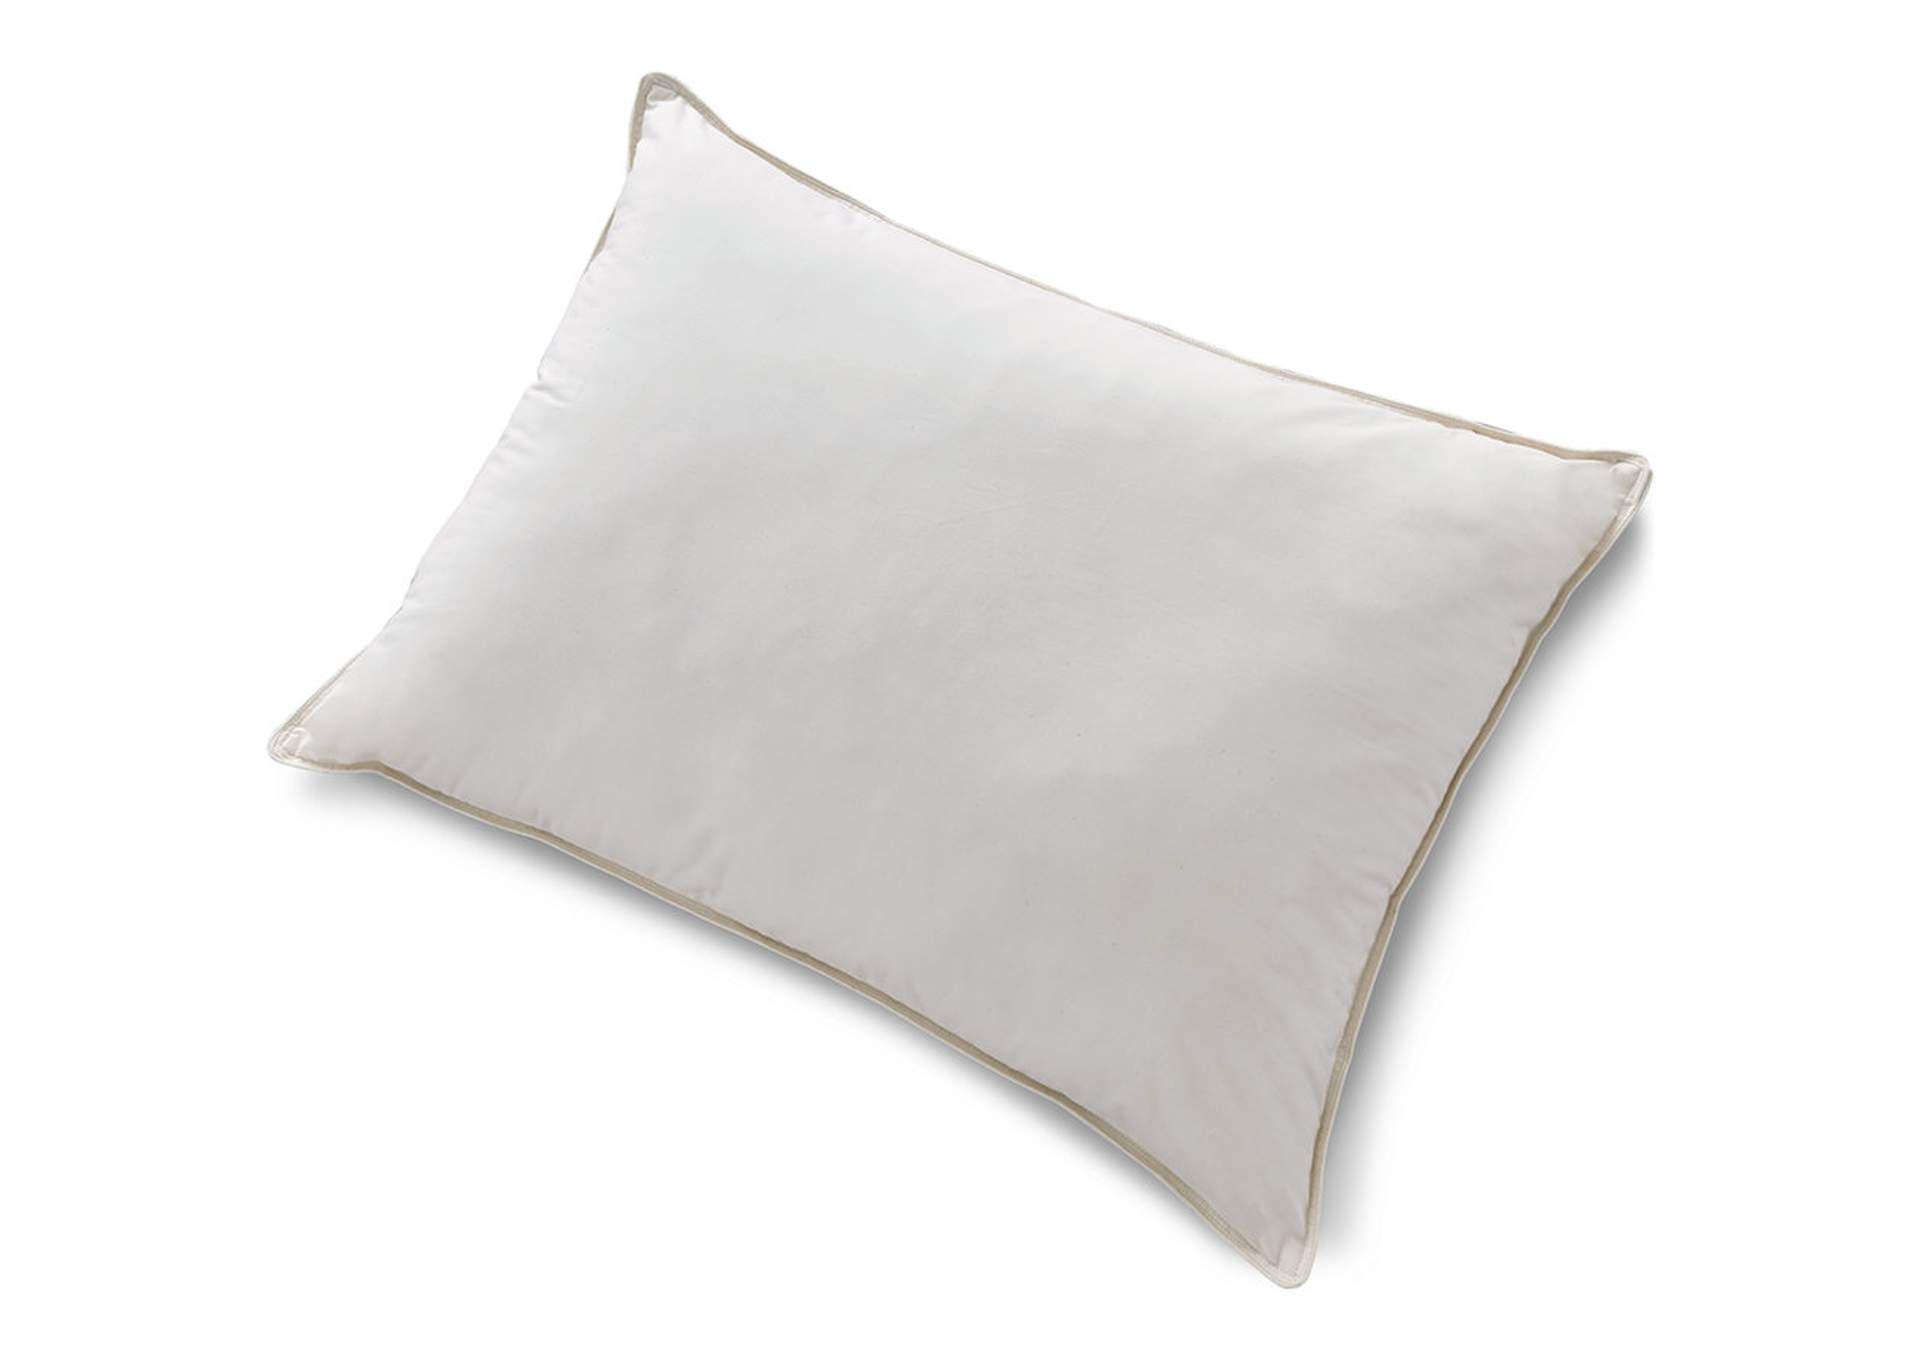 Z123 Pillow Series Cotton Allergy Pillow,Direct To Consumer Express